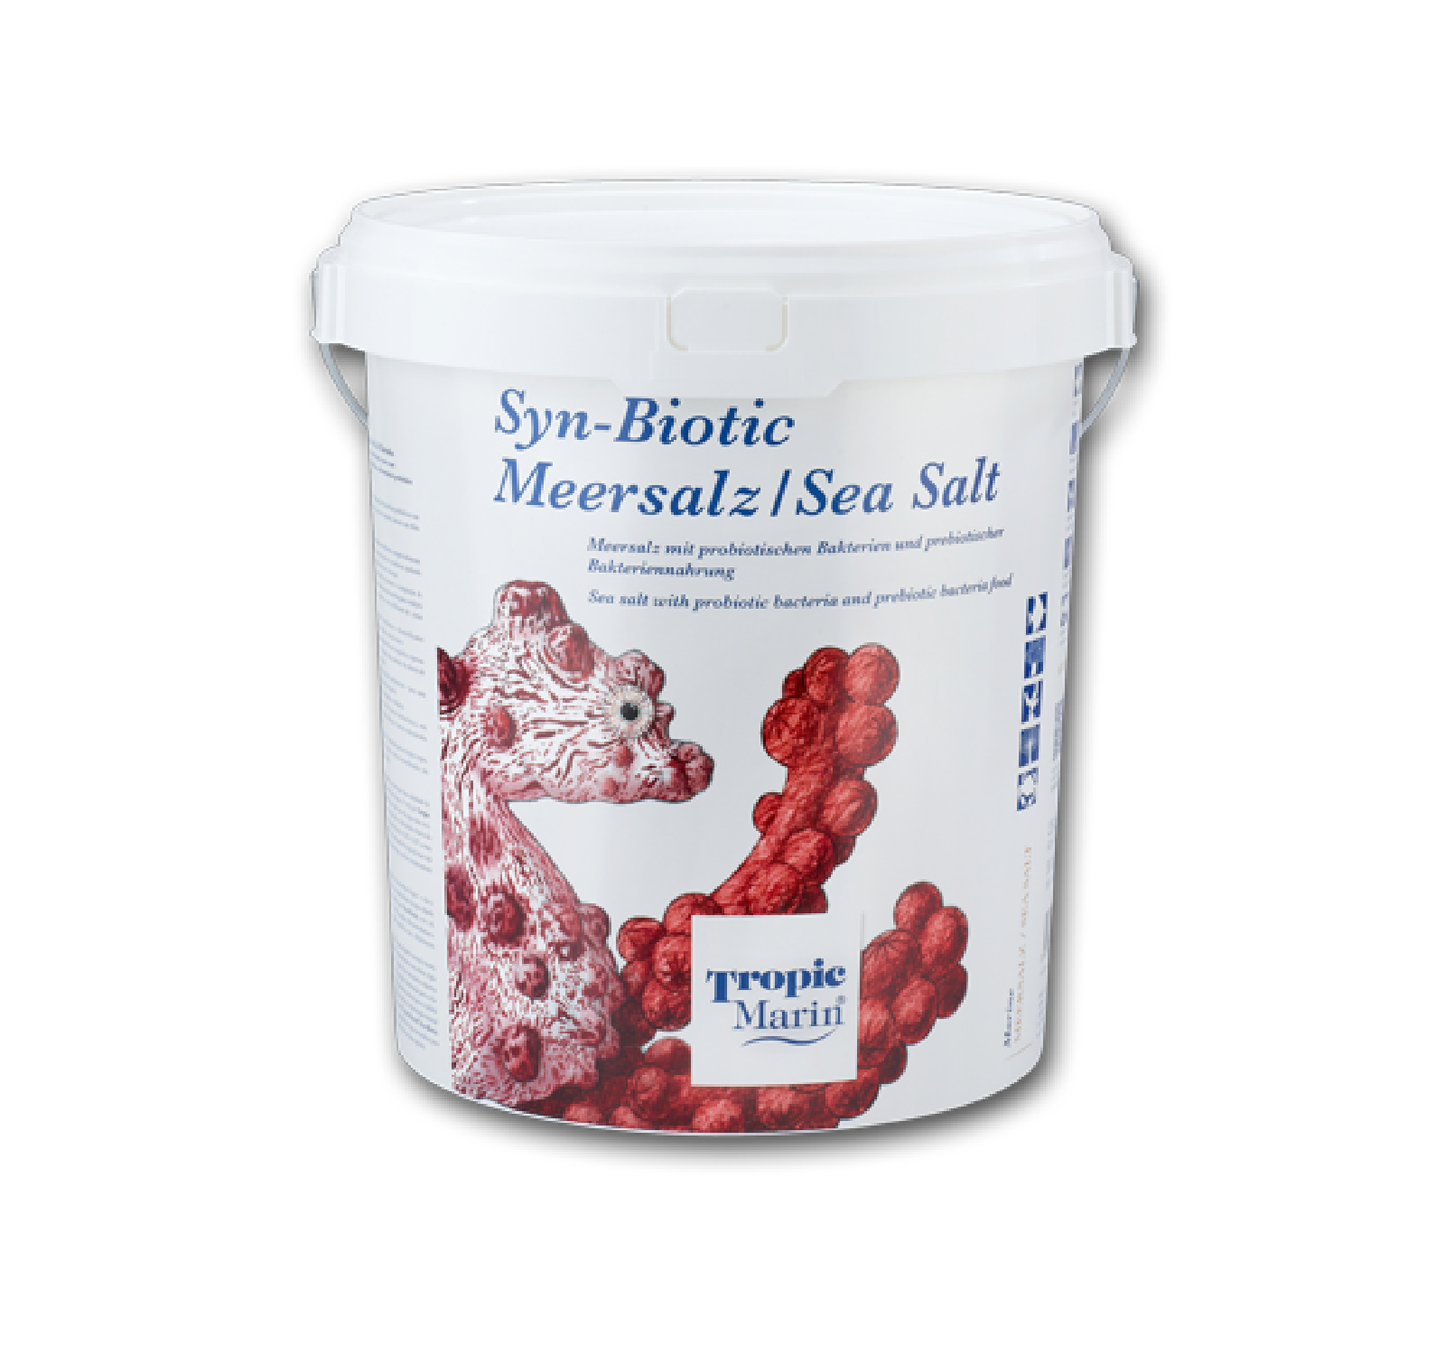 Syn-Biotic Sale Marino